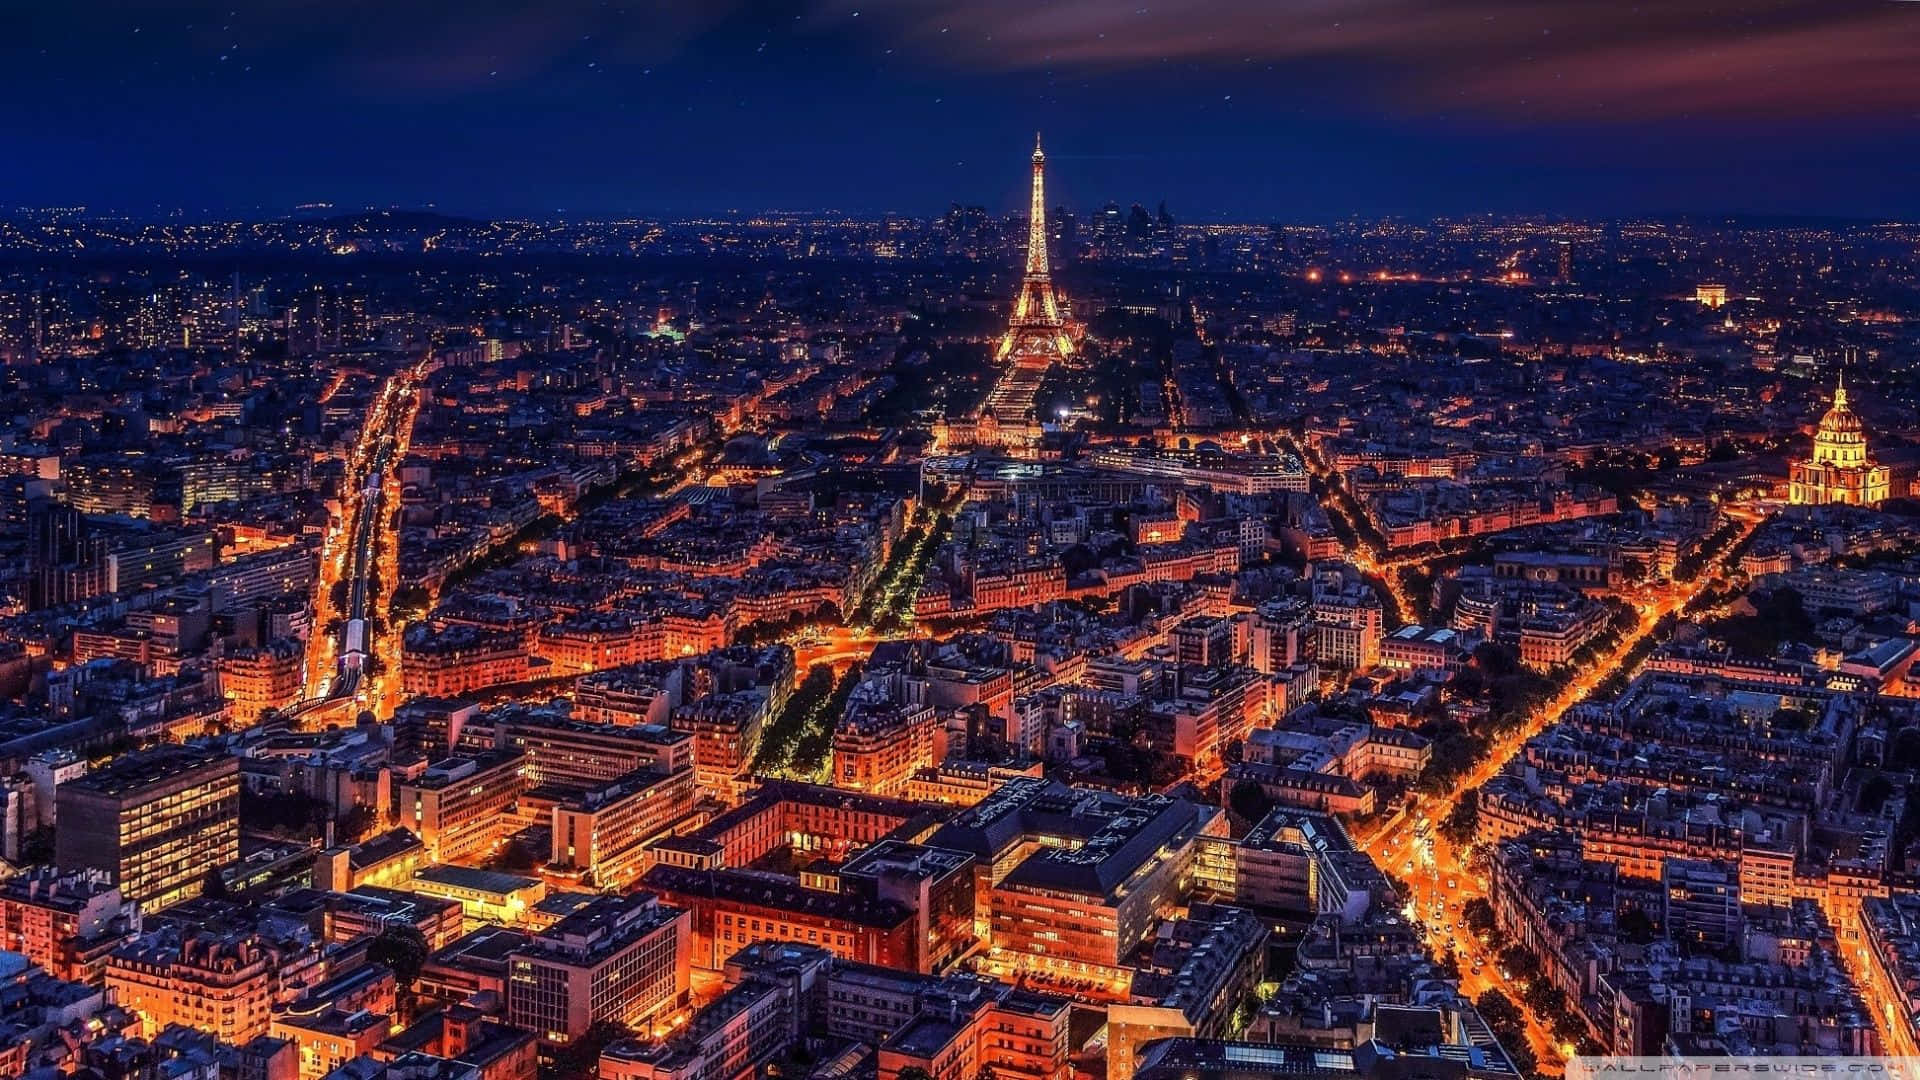 Majestic Eiffel Tower Illuminated At Night In Paris